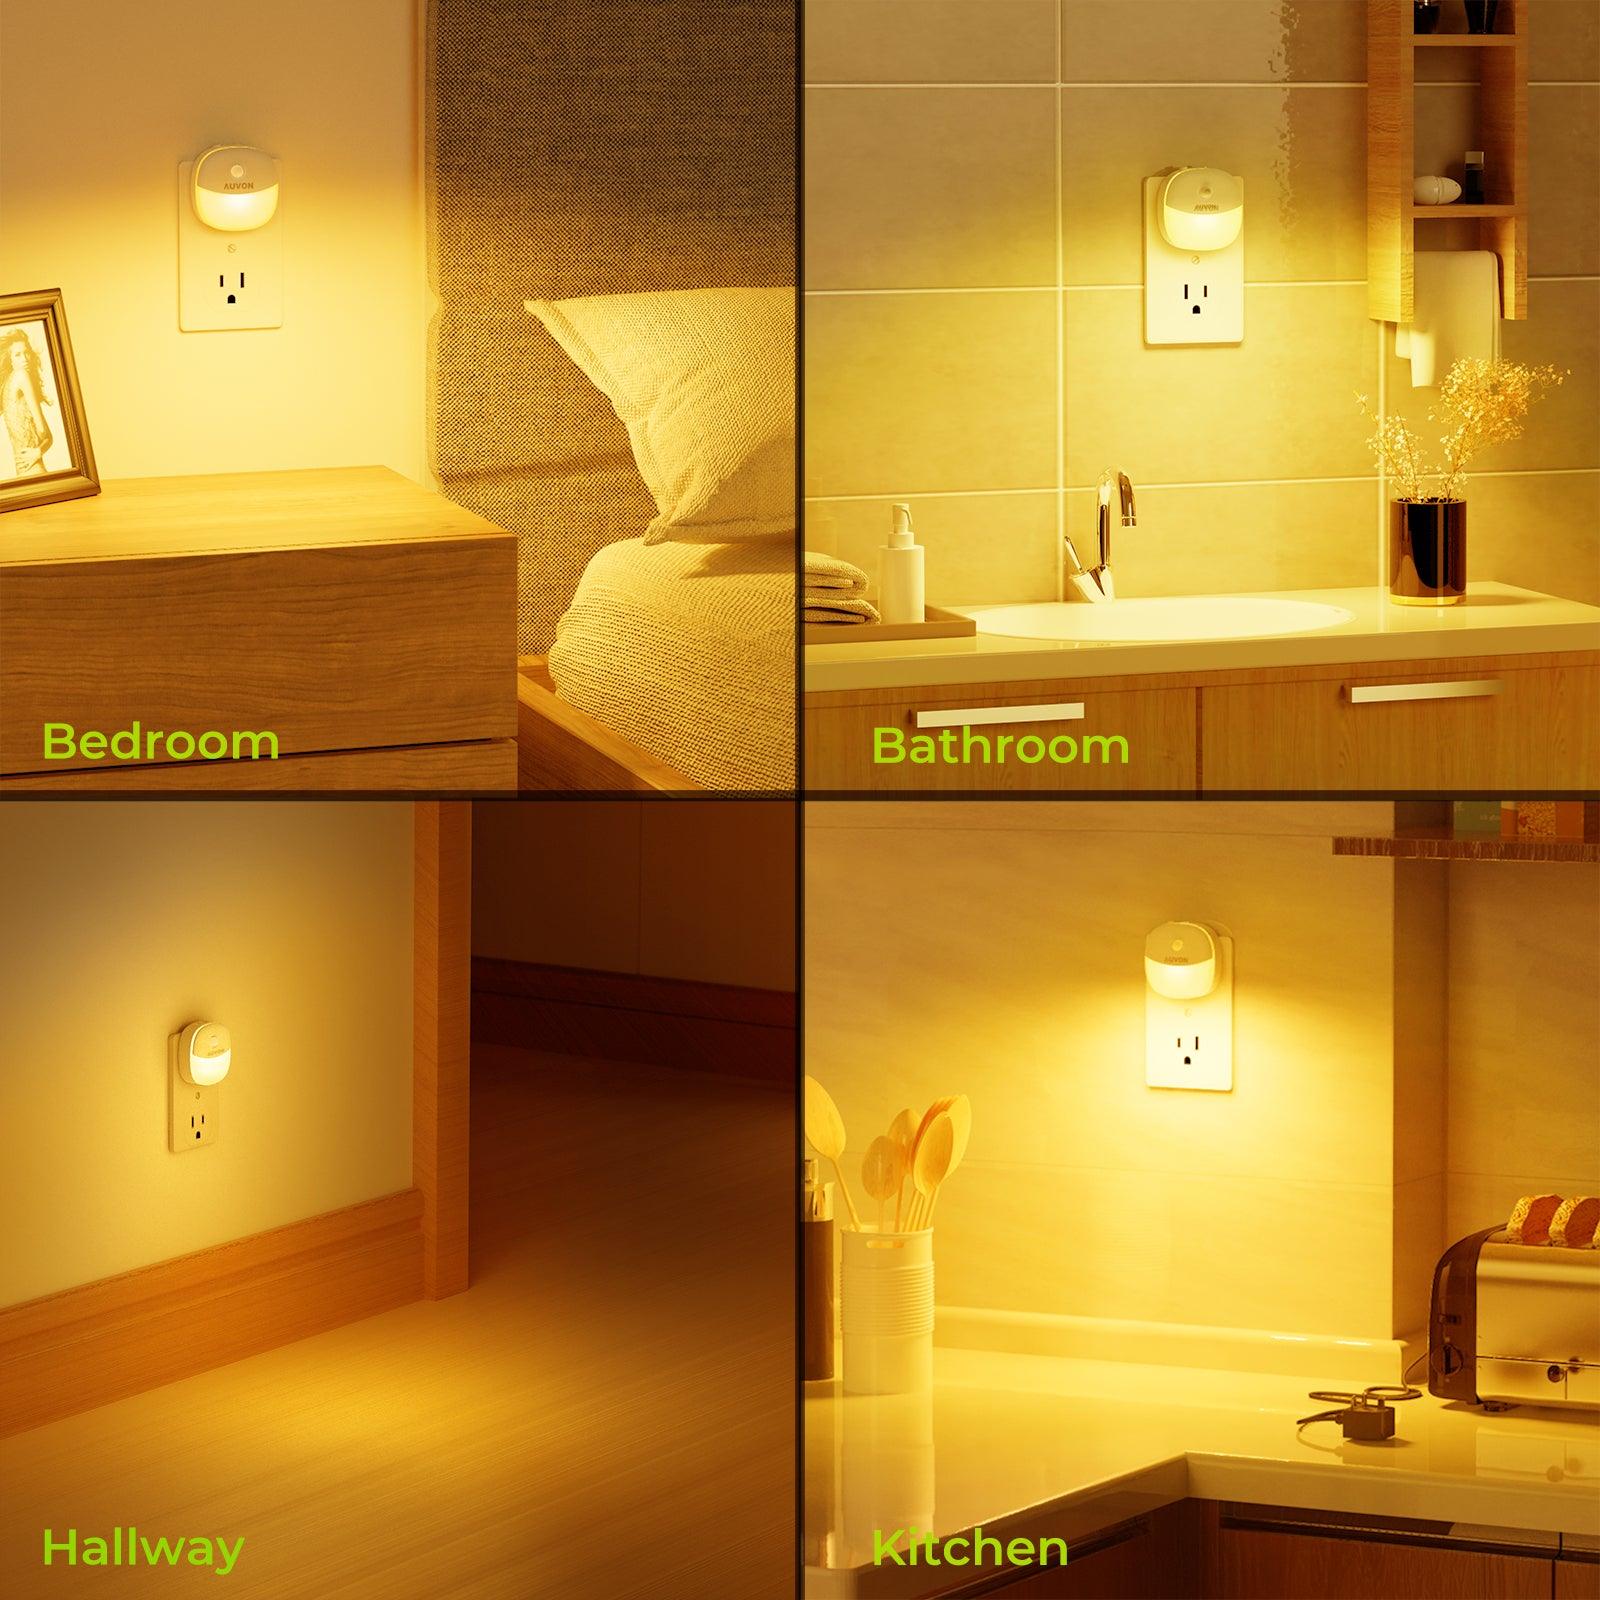 AUVON Plug-in LED Motion Sensor Night Light, Warm White LED Nightlight with Dusk to Dawn Sensor, Motion Sensor, Adjustable Brightness for Bedroom, Bathroom, Kitchen, Hallway, Stairs (2 Pack) - AUVON